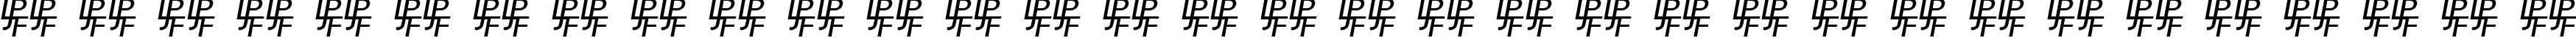 Пример написания русского алфавита шрифтом NewStyle Embossed